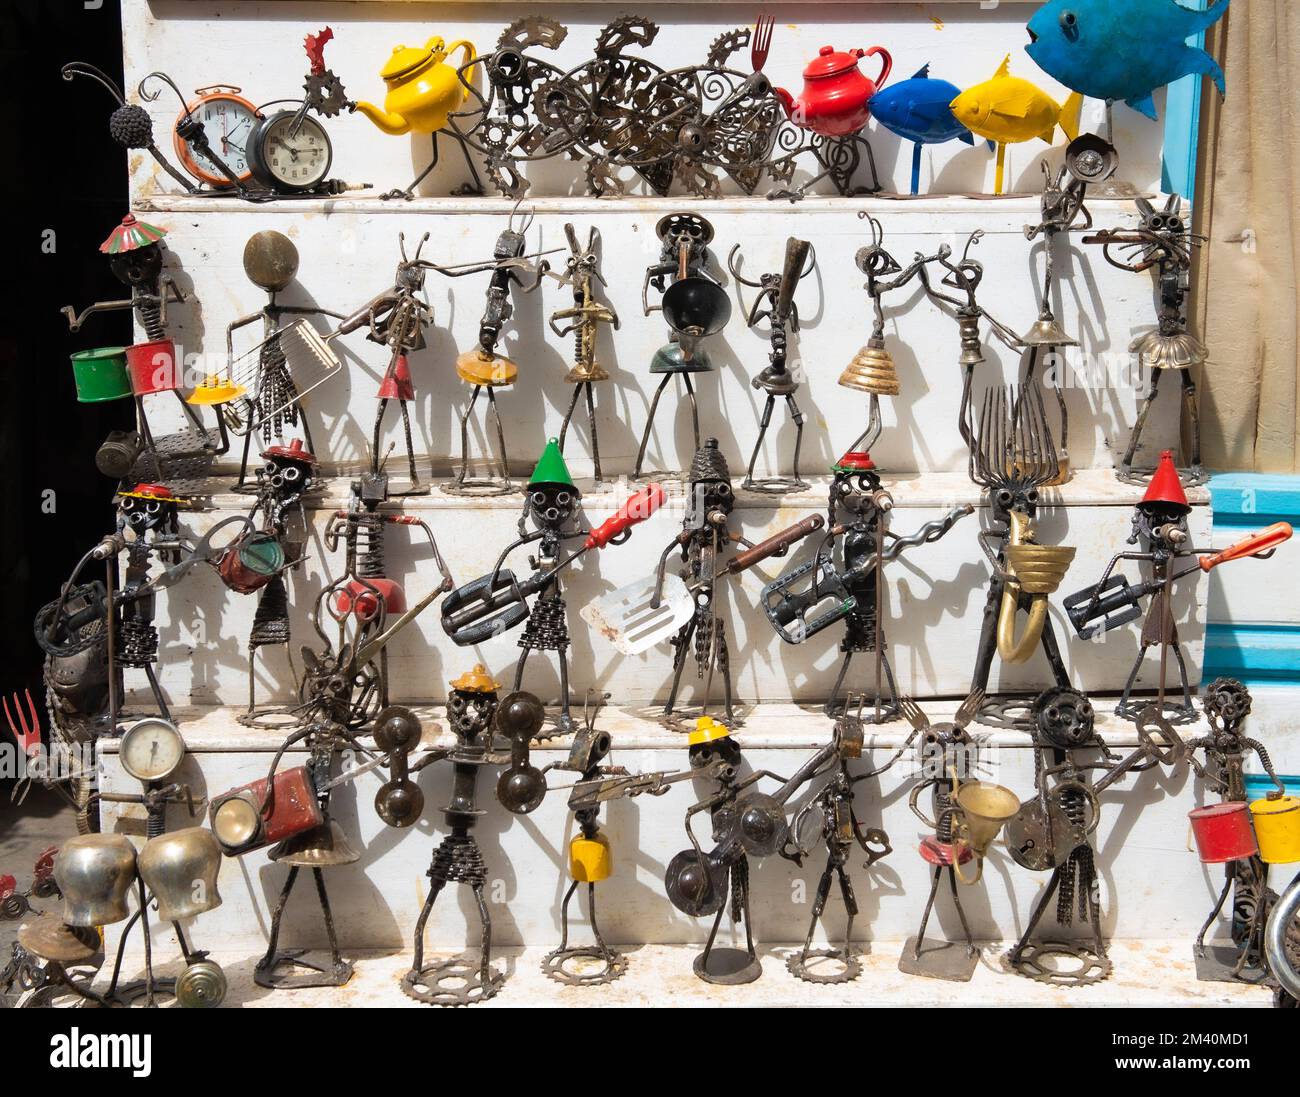 Upcycled metal street art figurines dazzle tourists in Essaouira Morocco's medina. Stock Photo